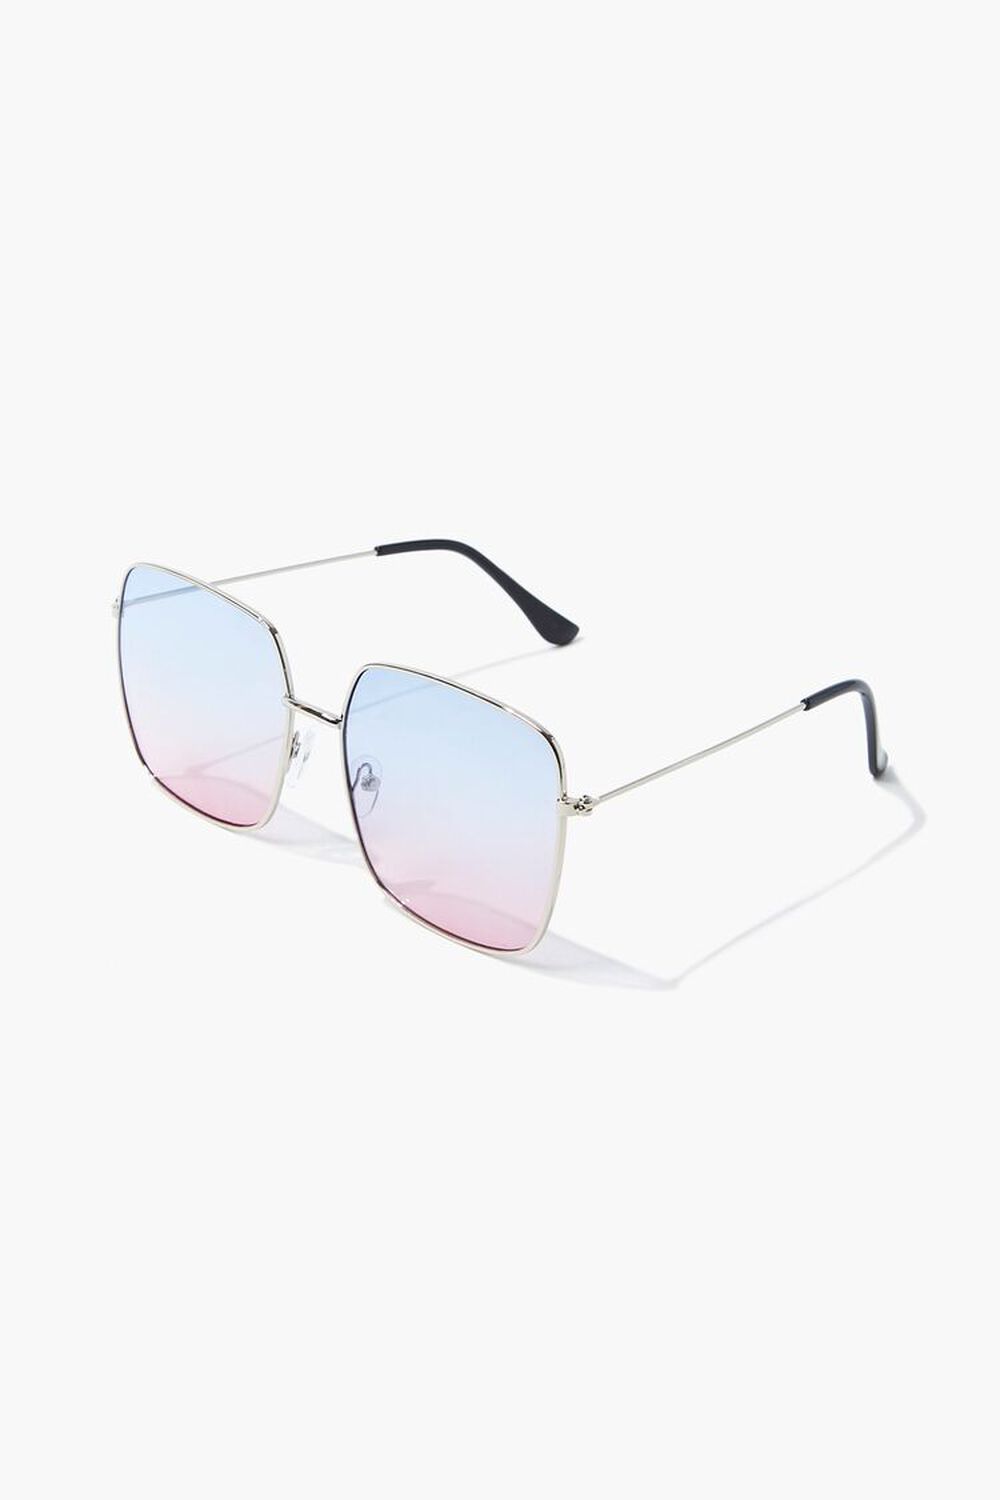 SILVER/BLUE Square Metal Sunglasses, image 2